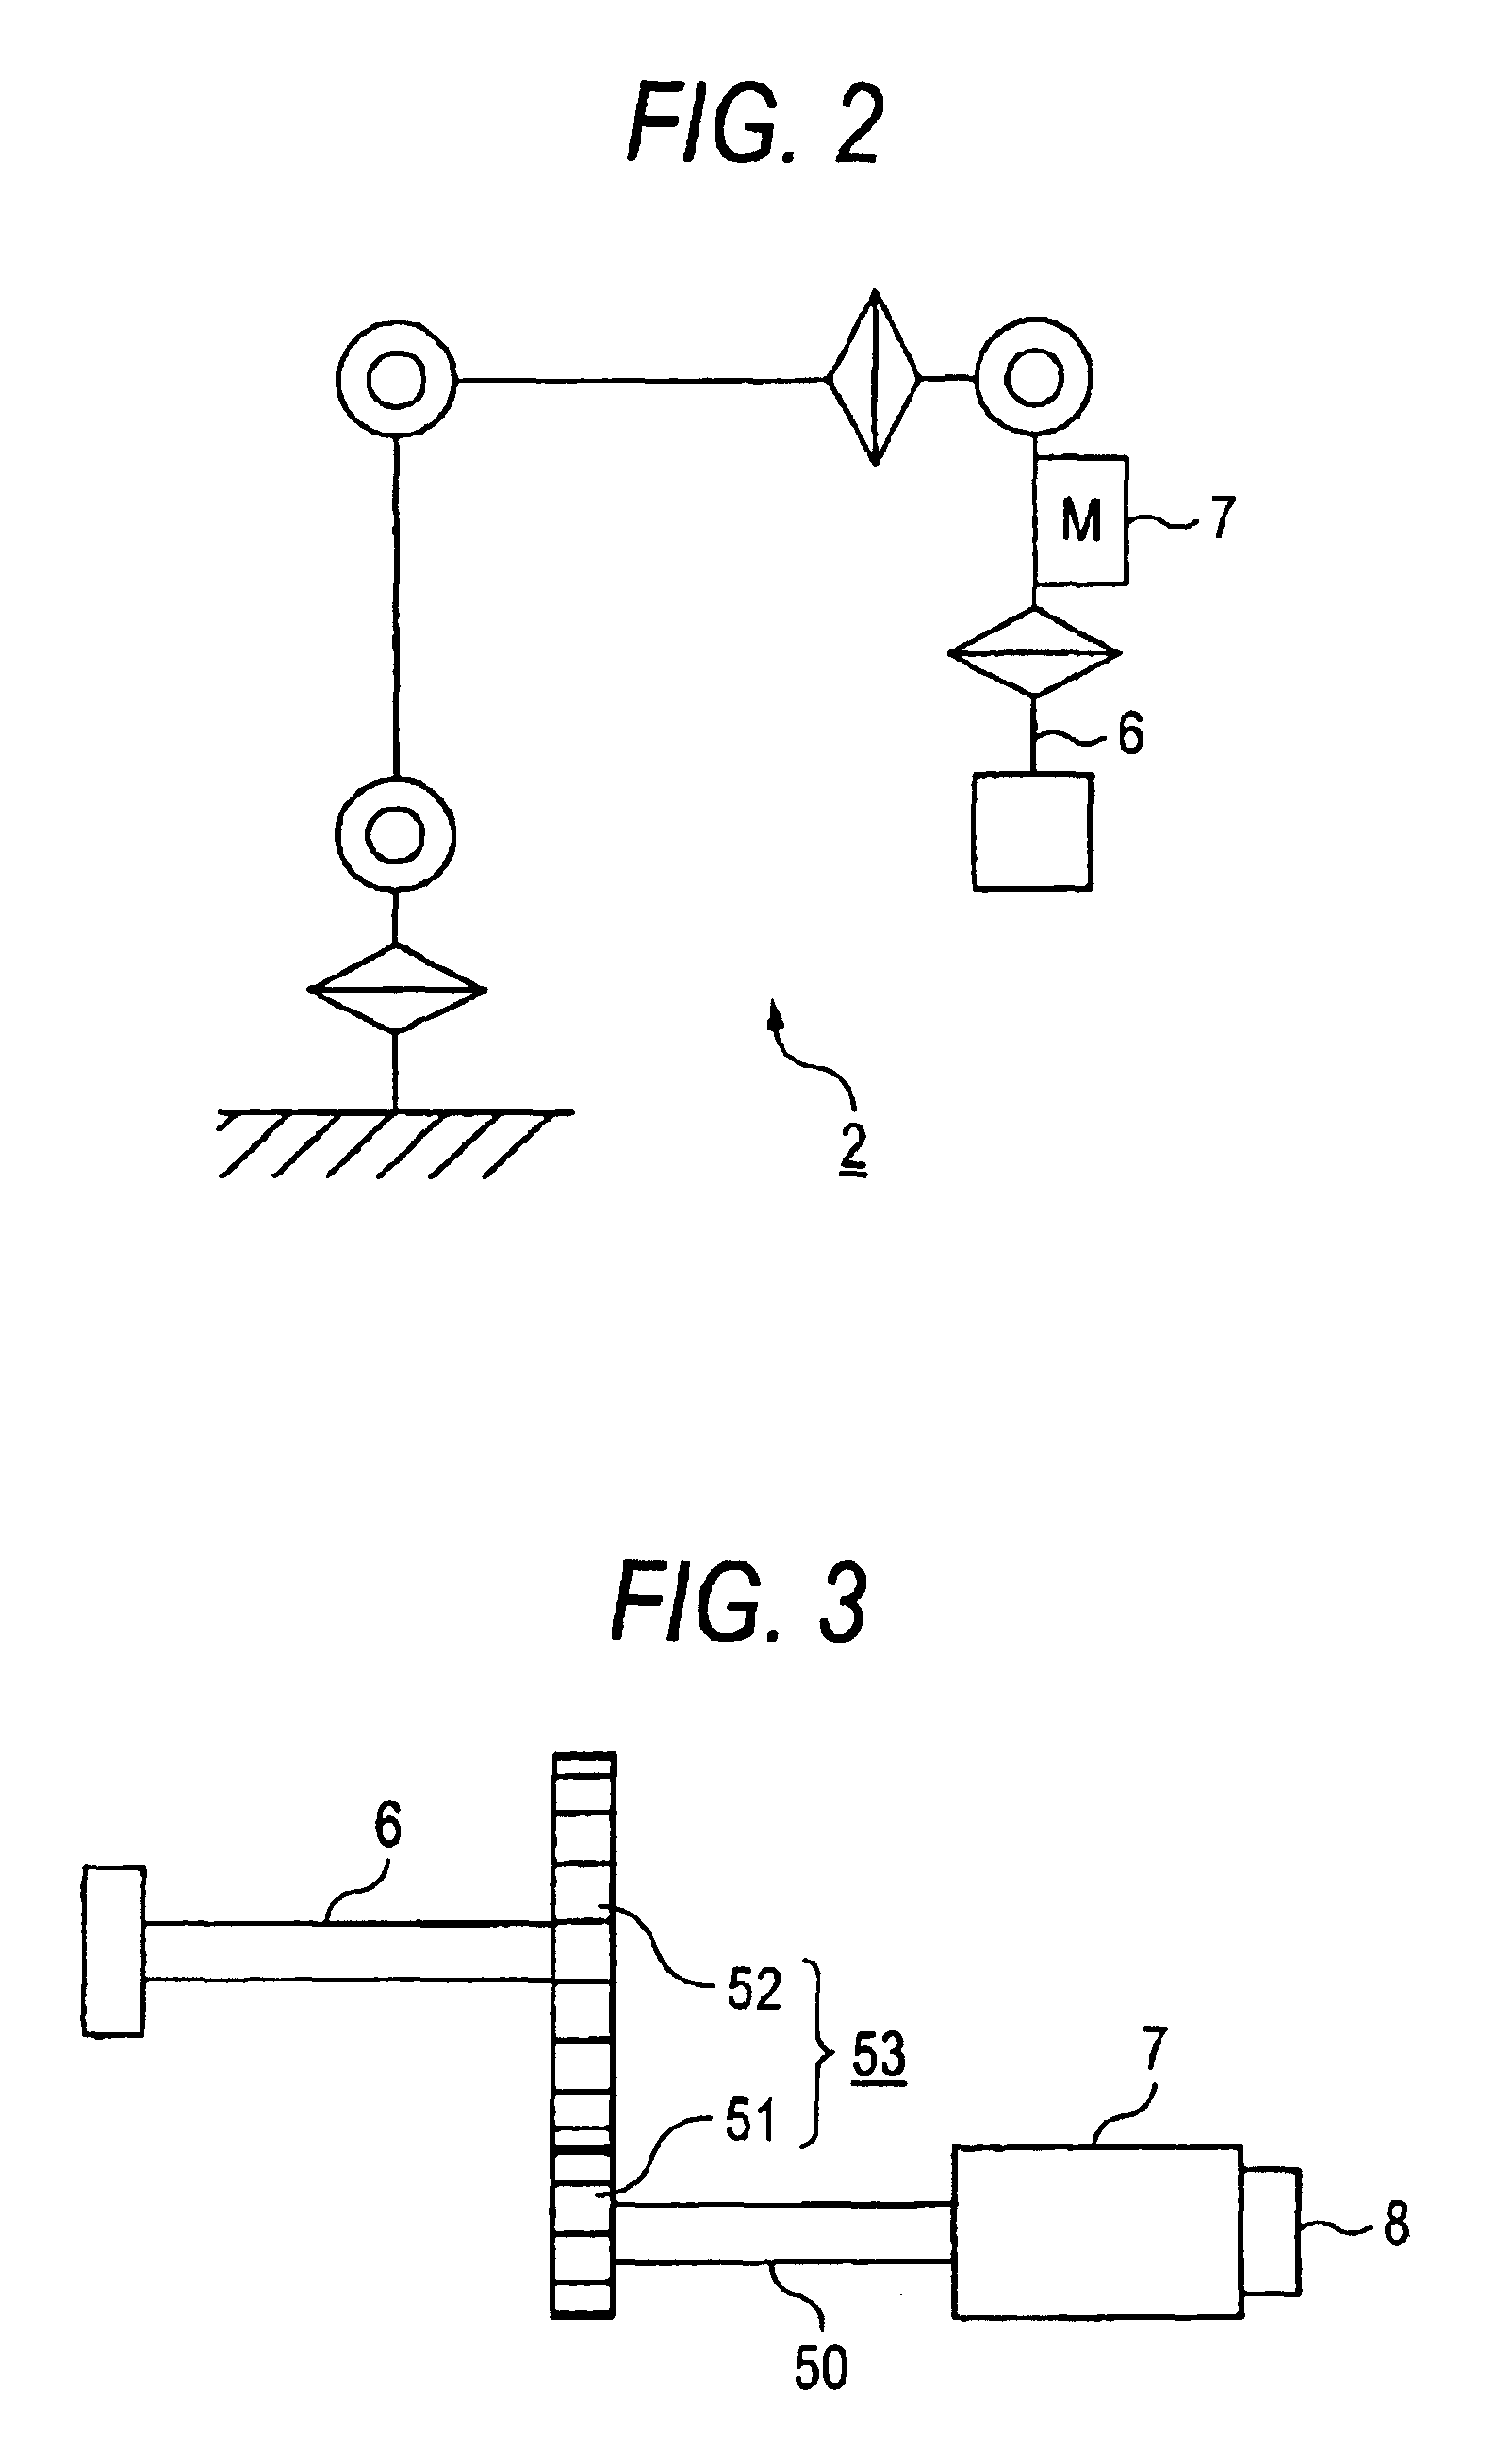 Conveyor system